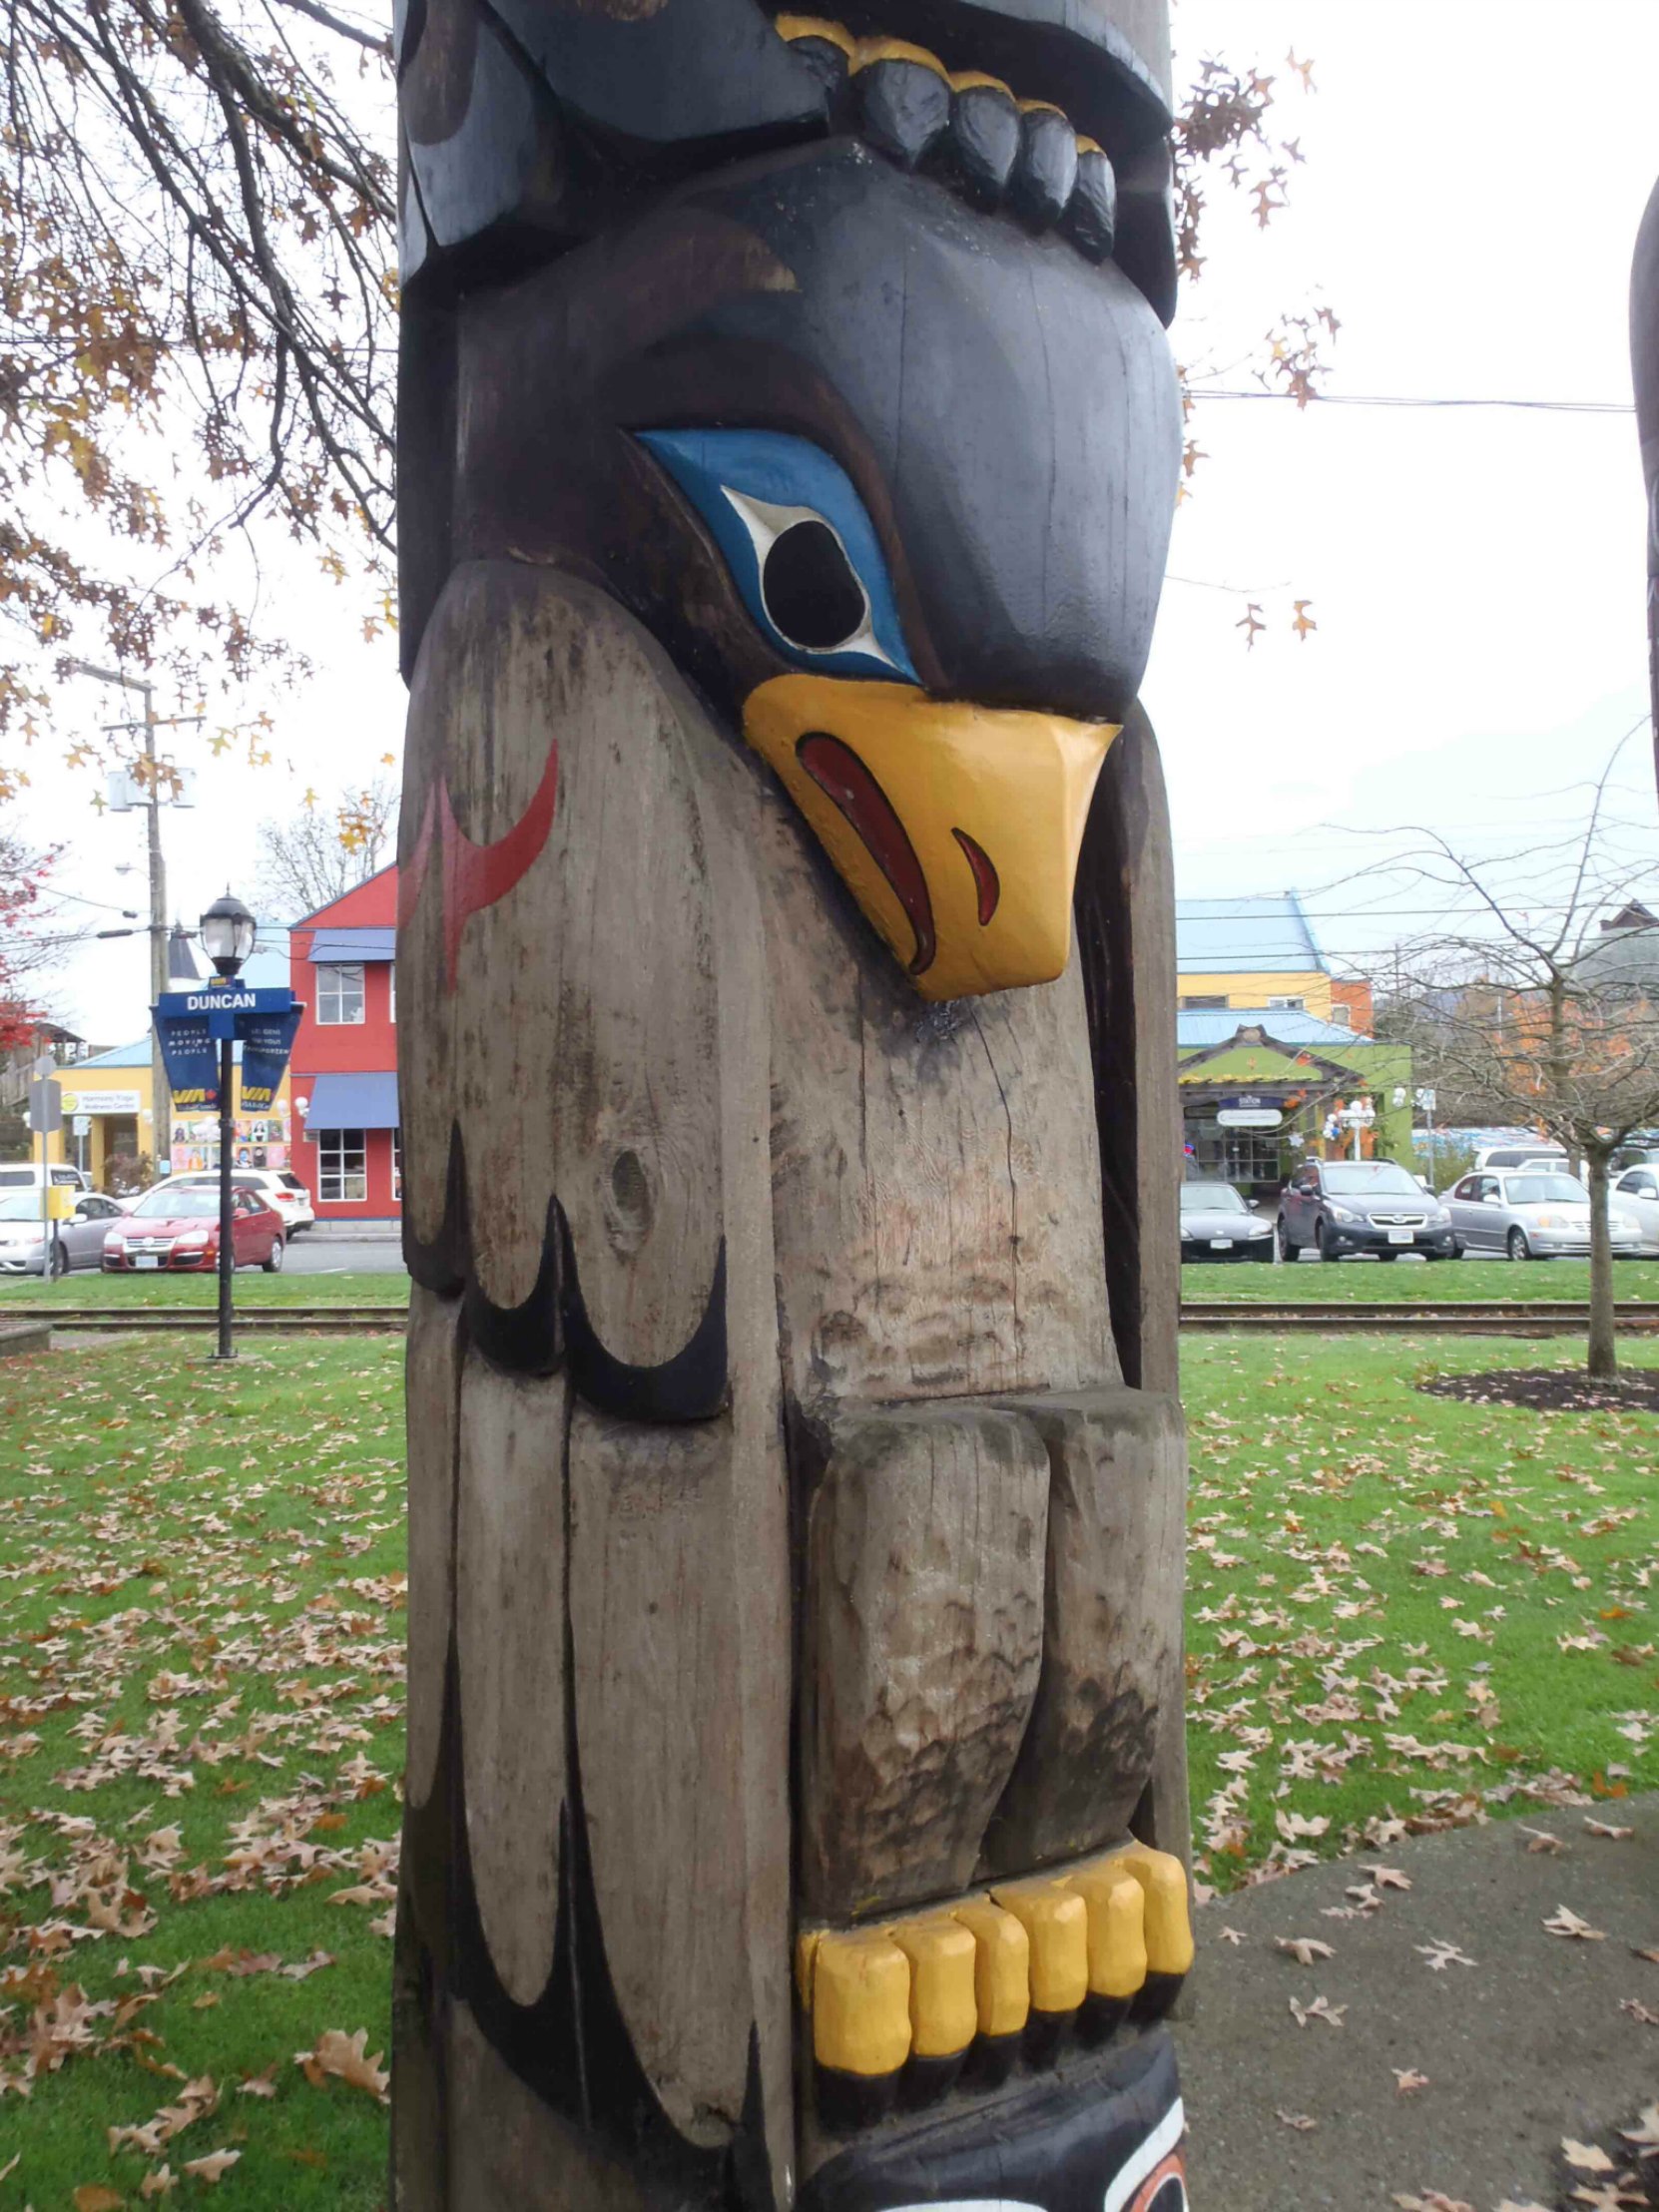 Transformation In Life totem pole, Bald Eagle figure, Canada Avenue, Duncan, B.C.